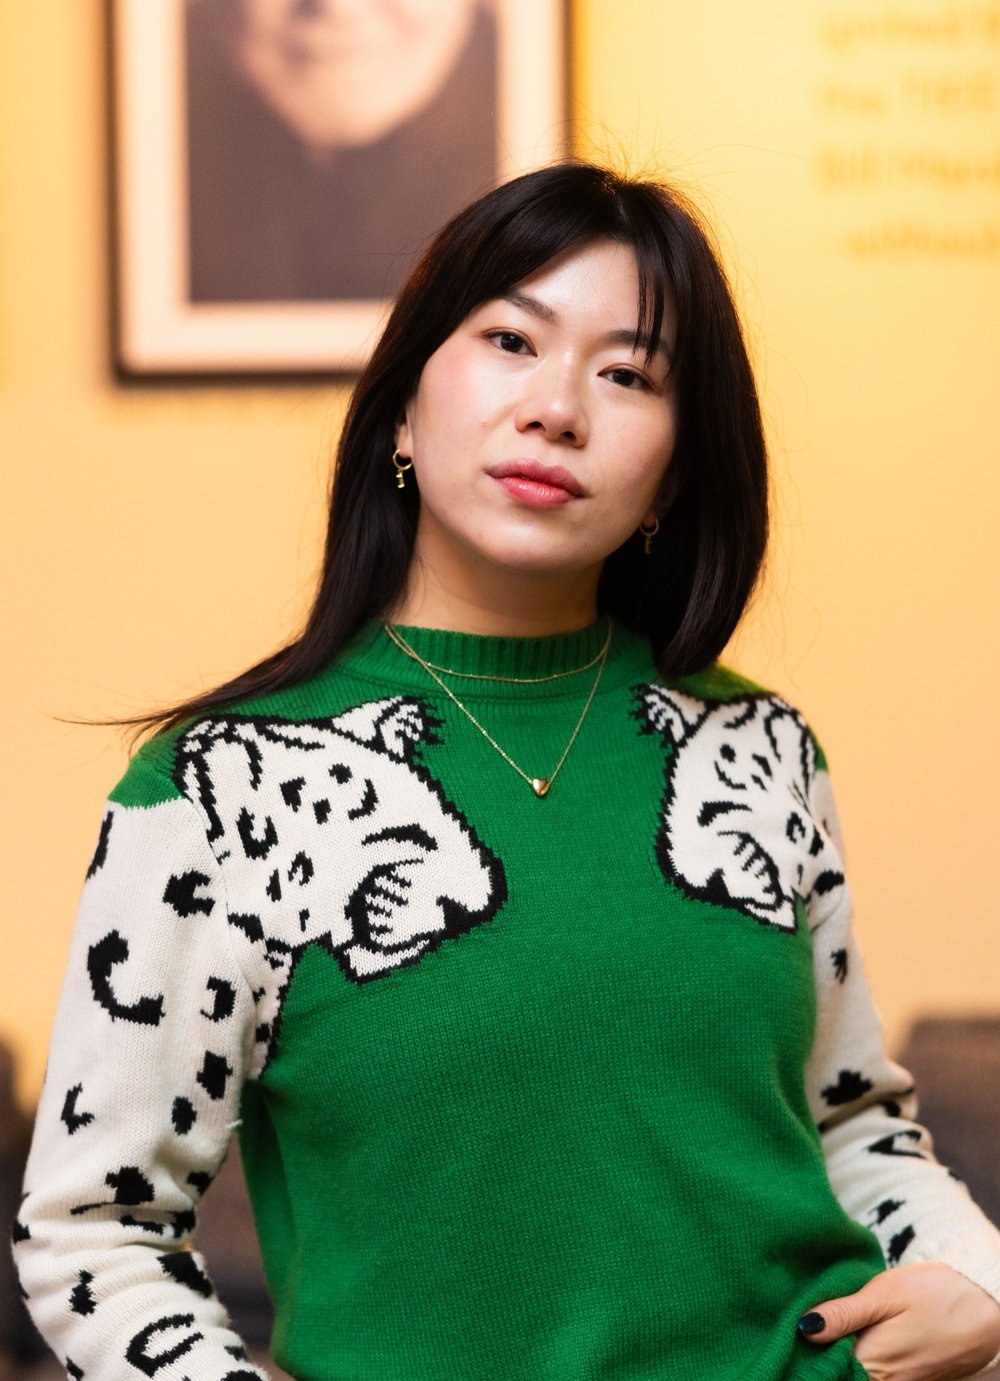 Janet-Rose Nguyen